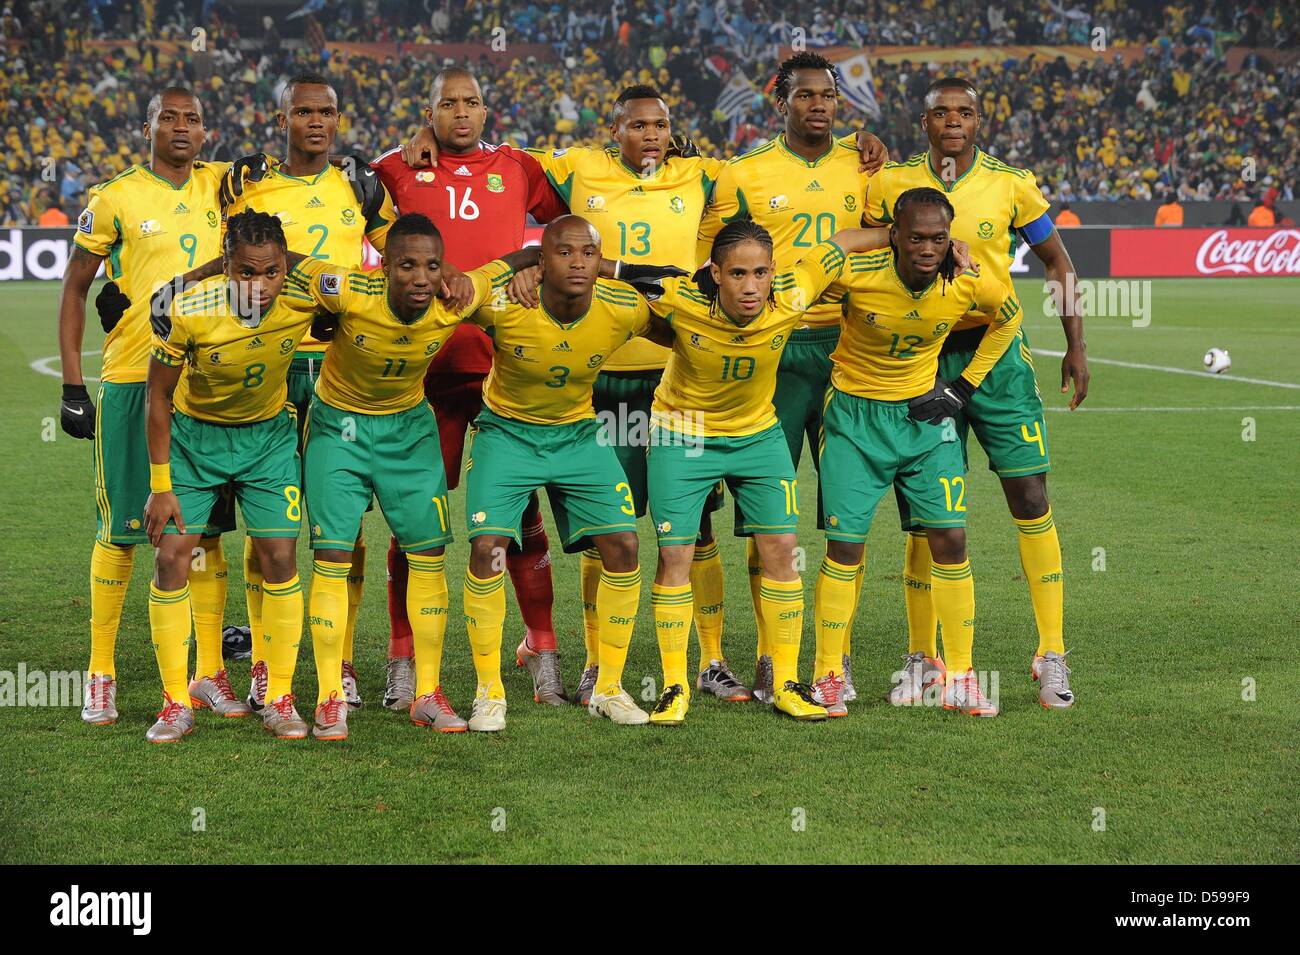 [Imagen: south-africas-team-pose-for-the-team-pho...D599F9.jpg]